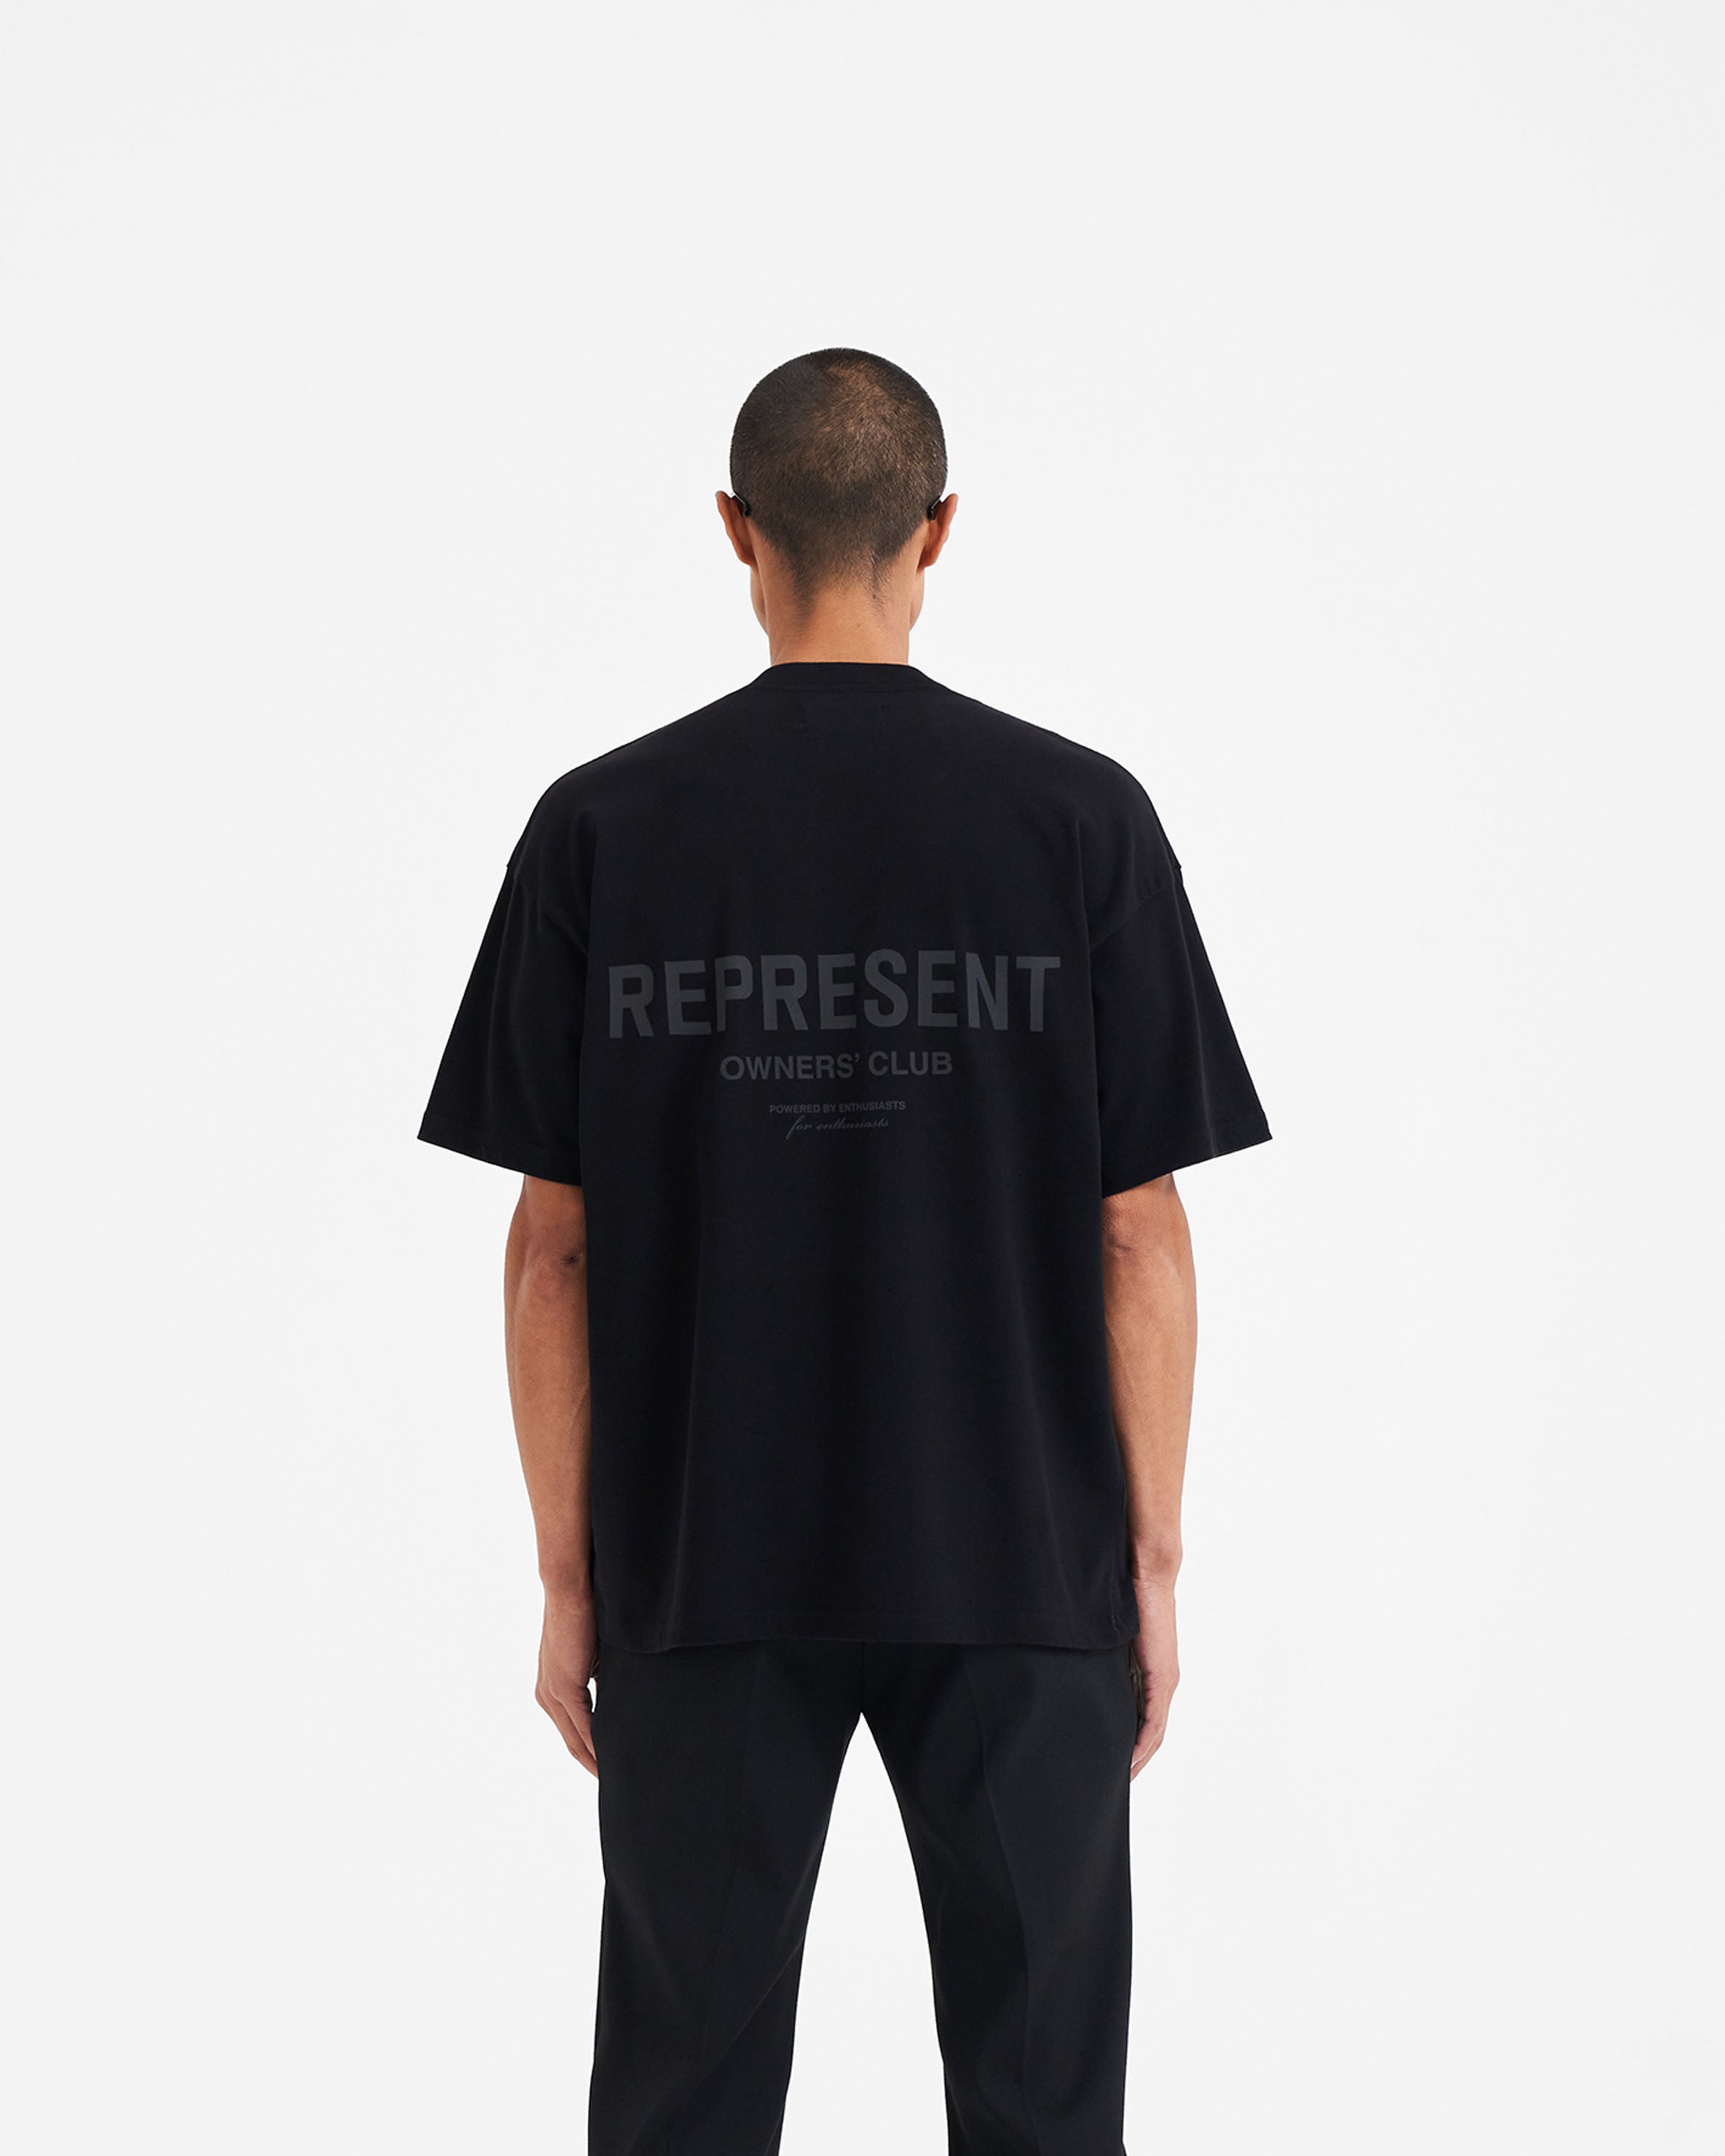 Black Reflective CLO REPRESENT | Owners\' Club | T-Shirt